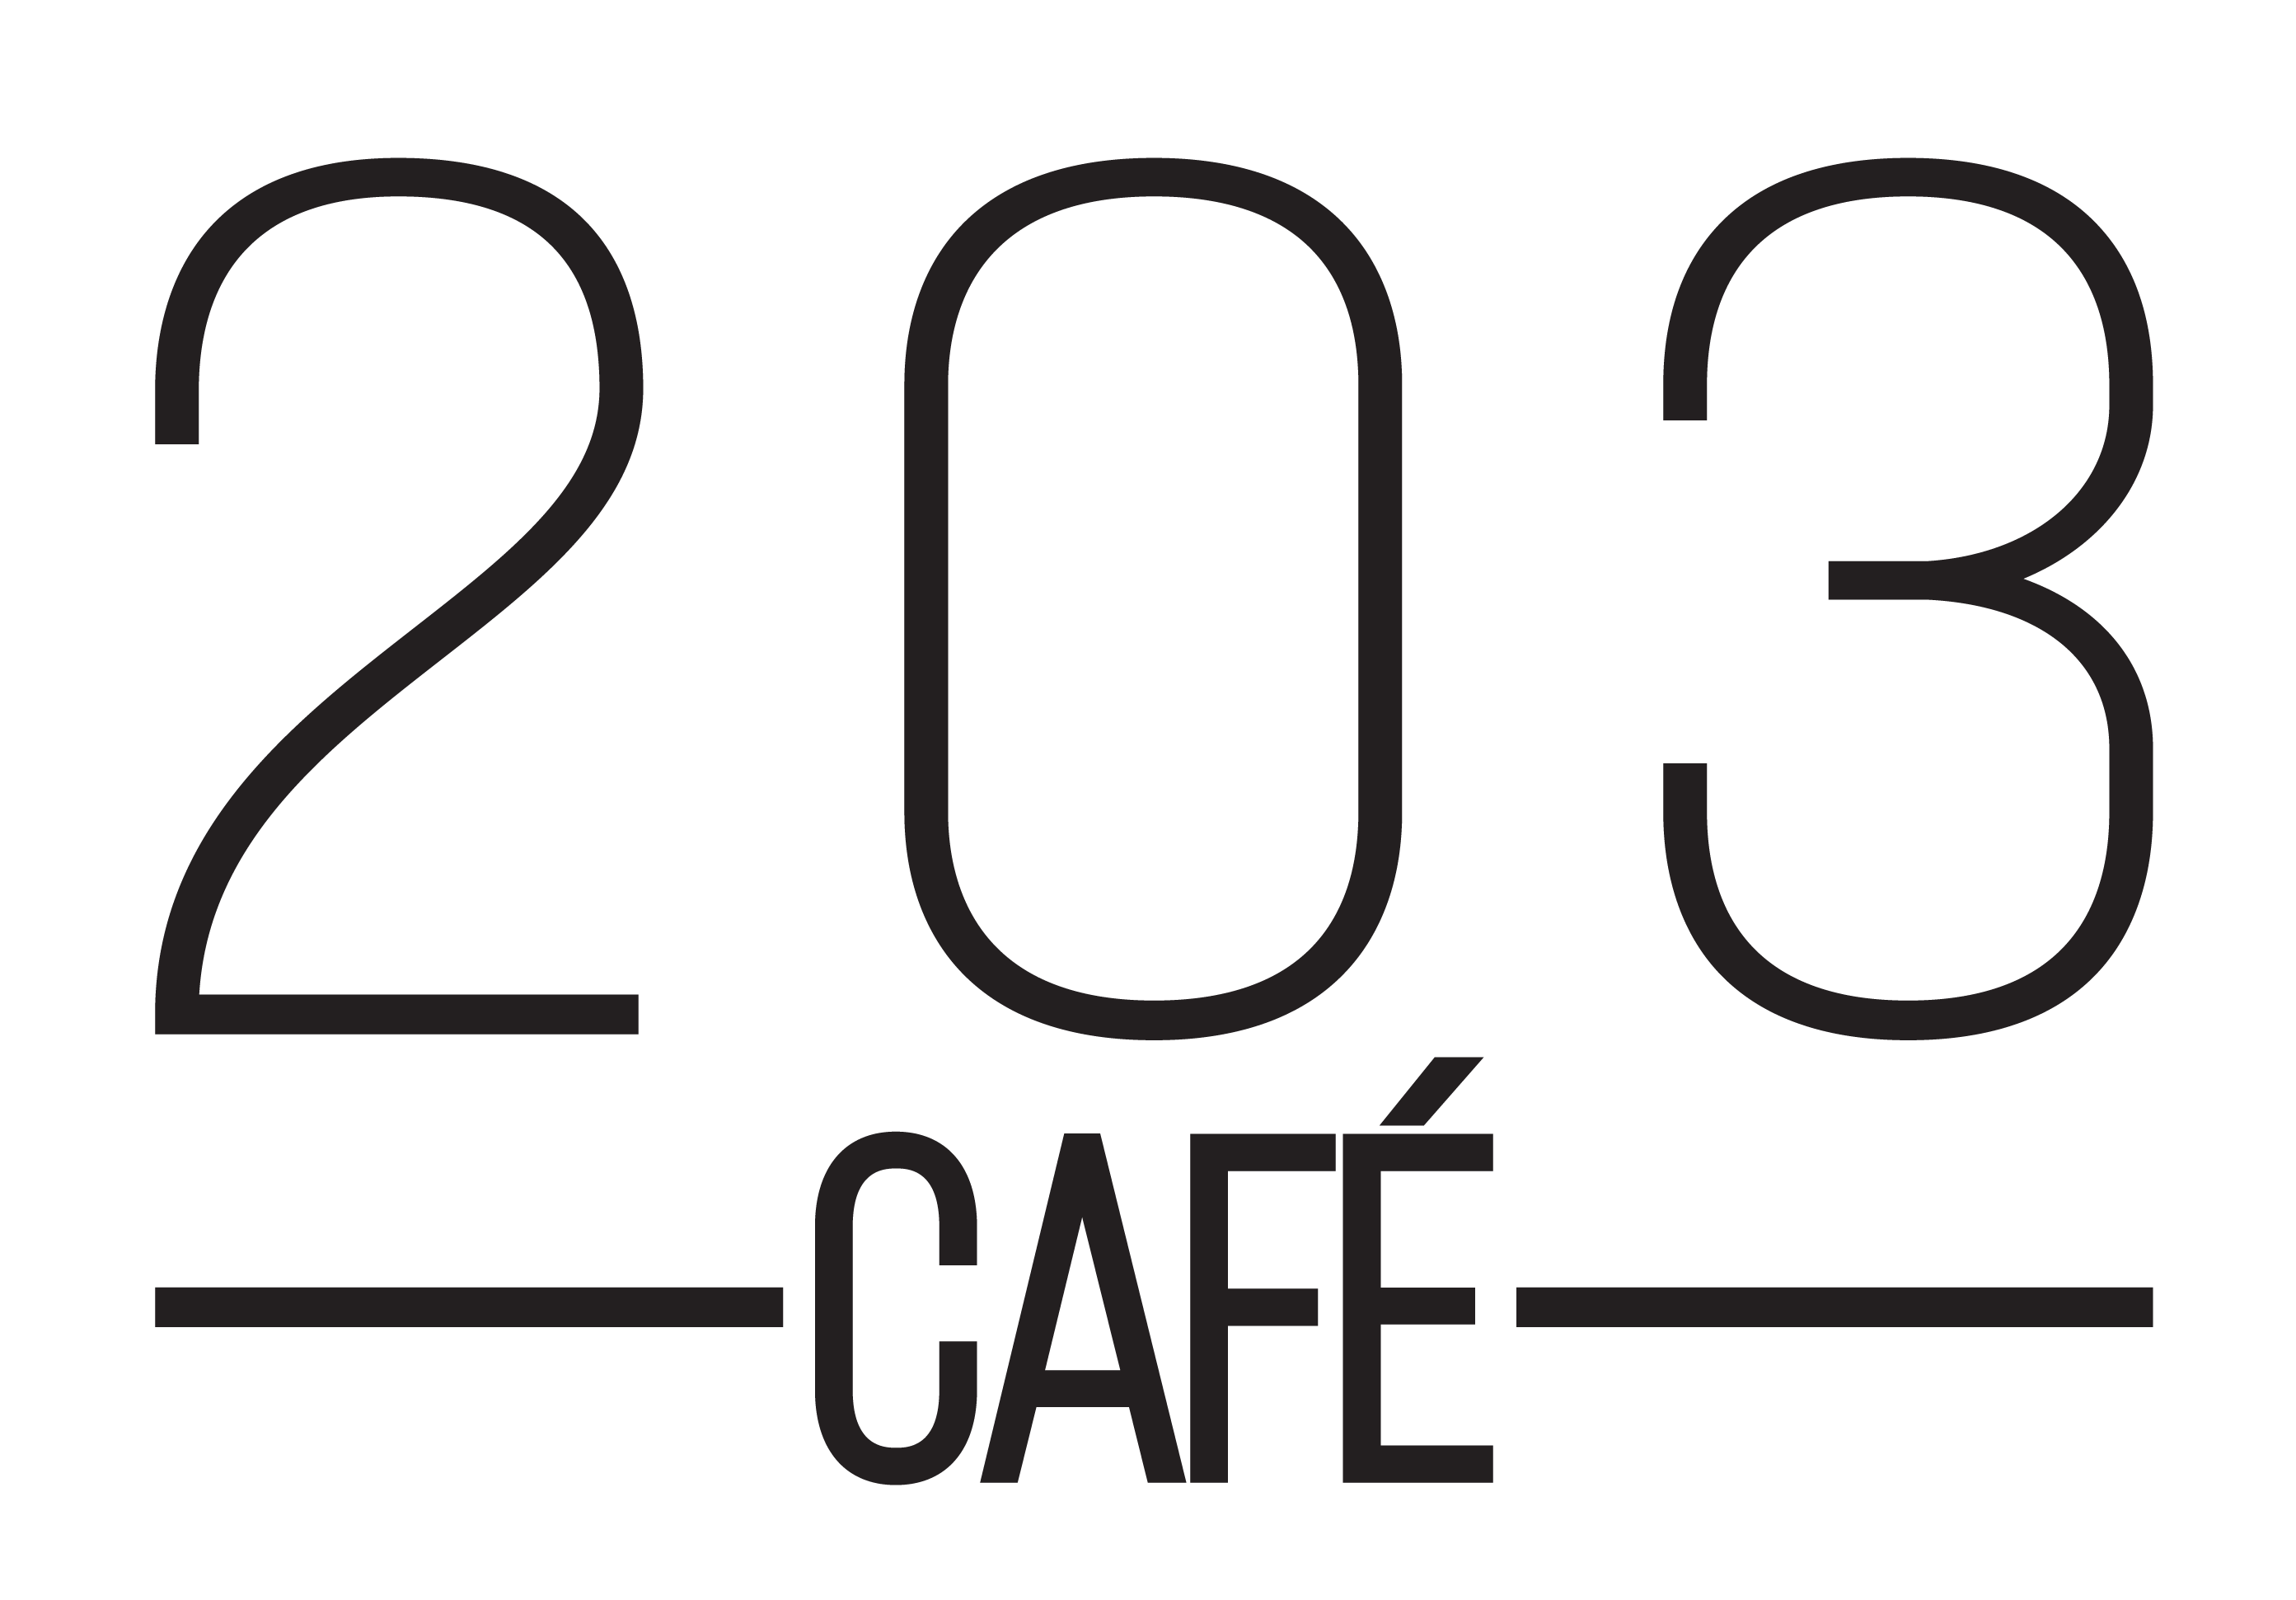 203 Cafe